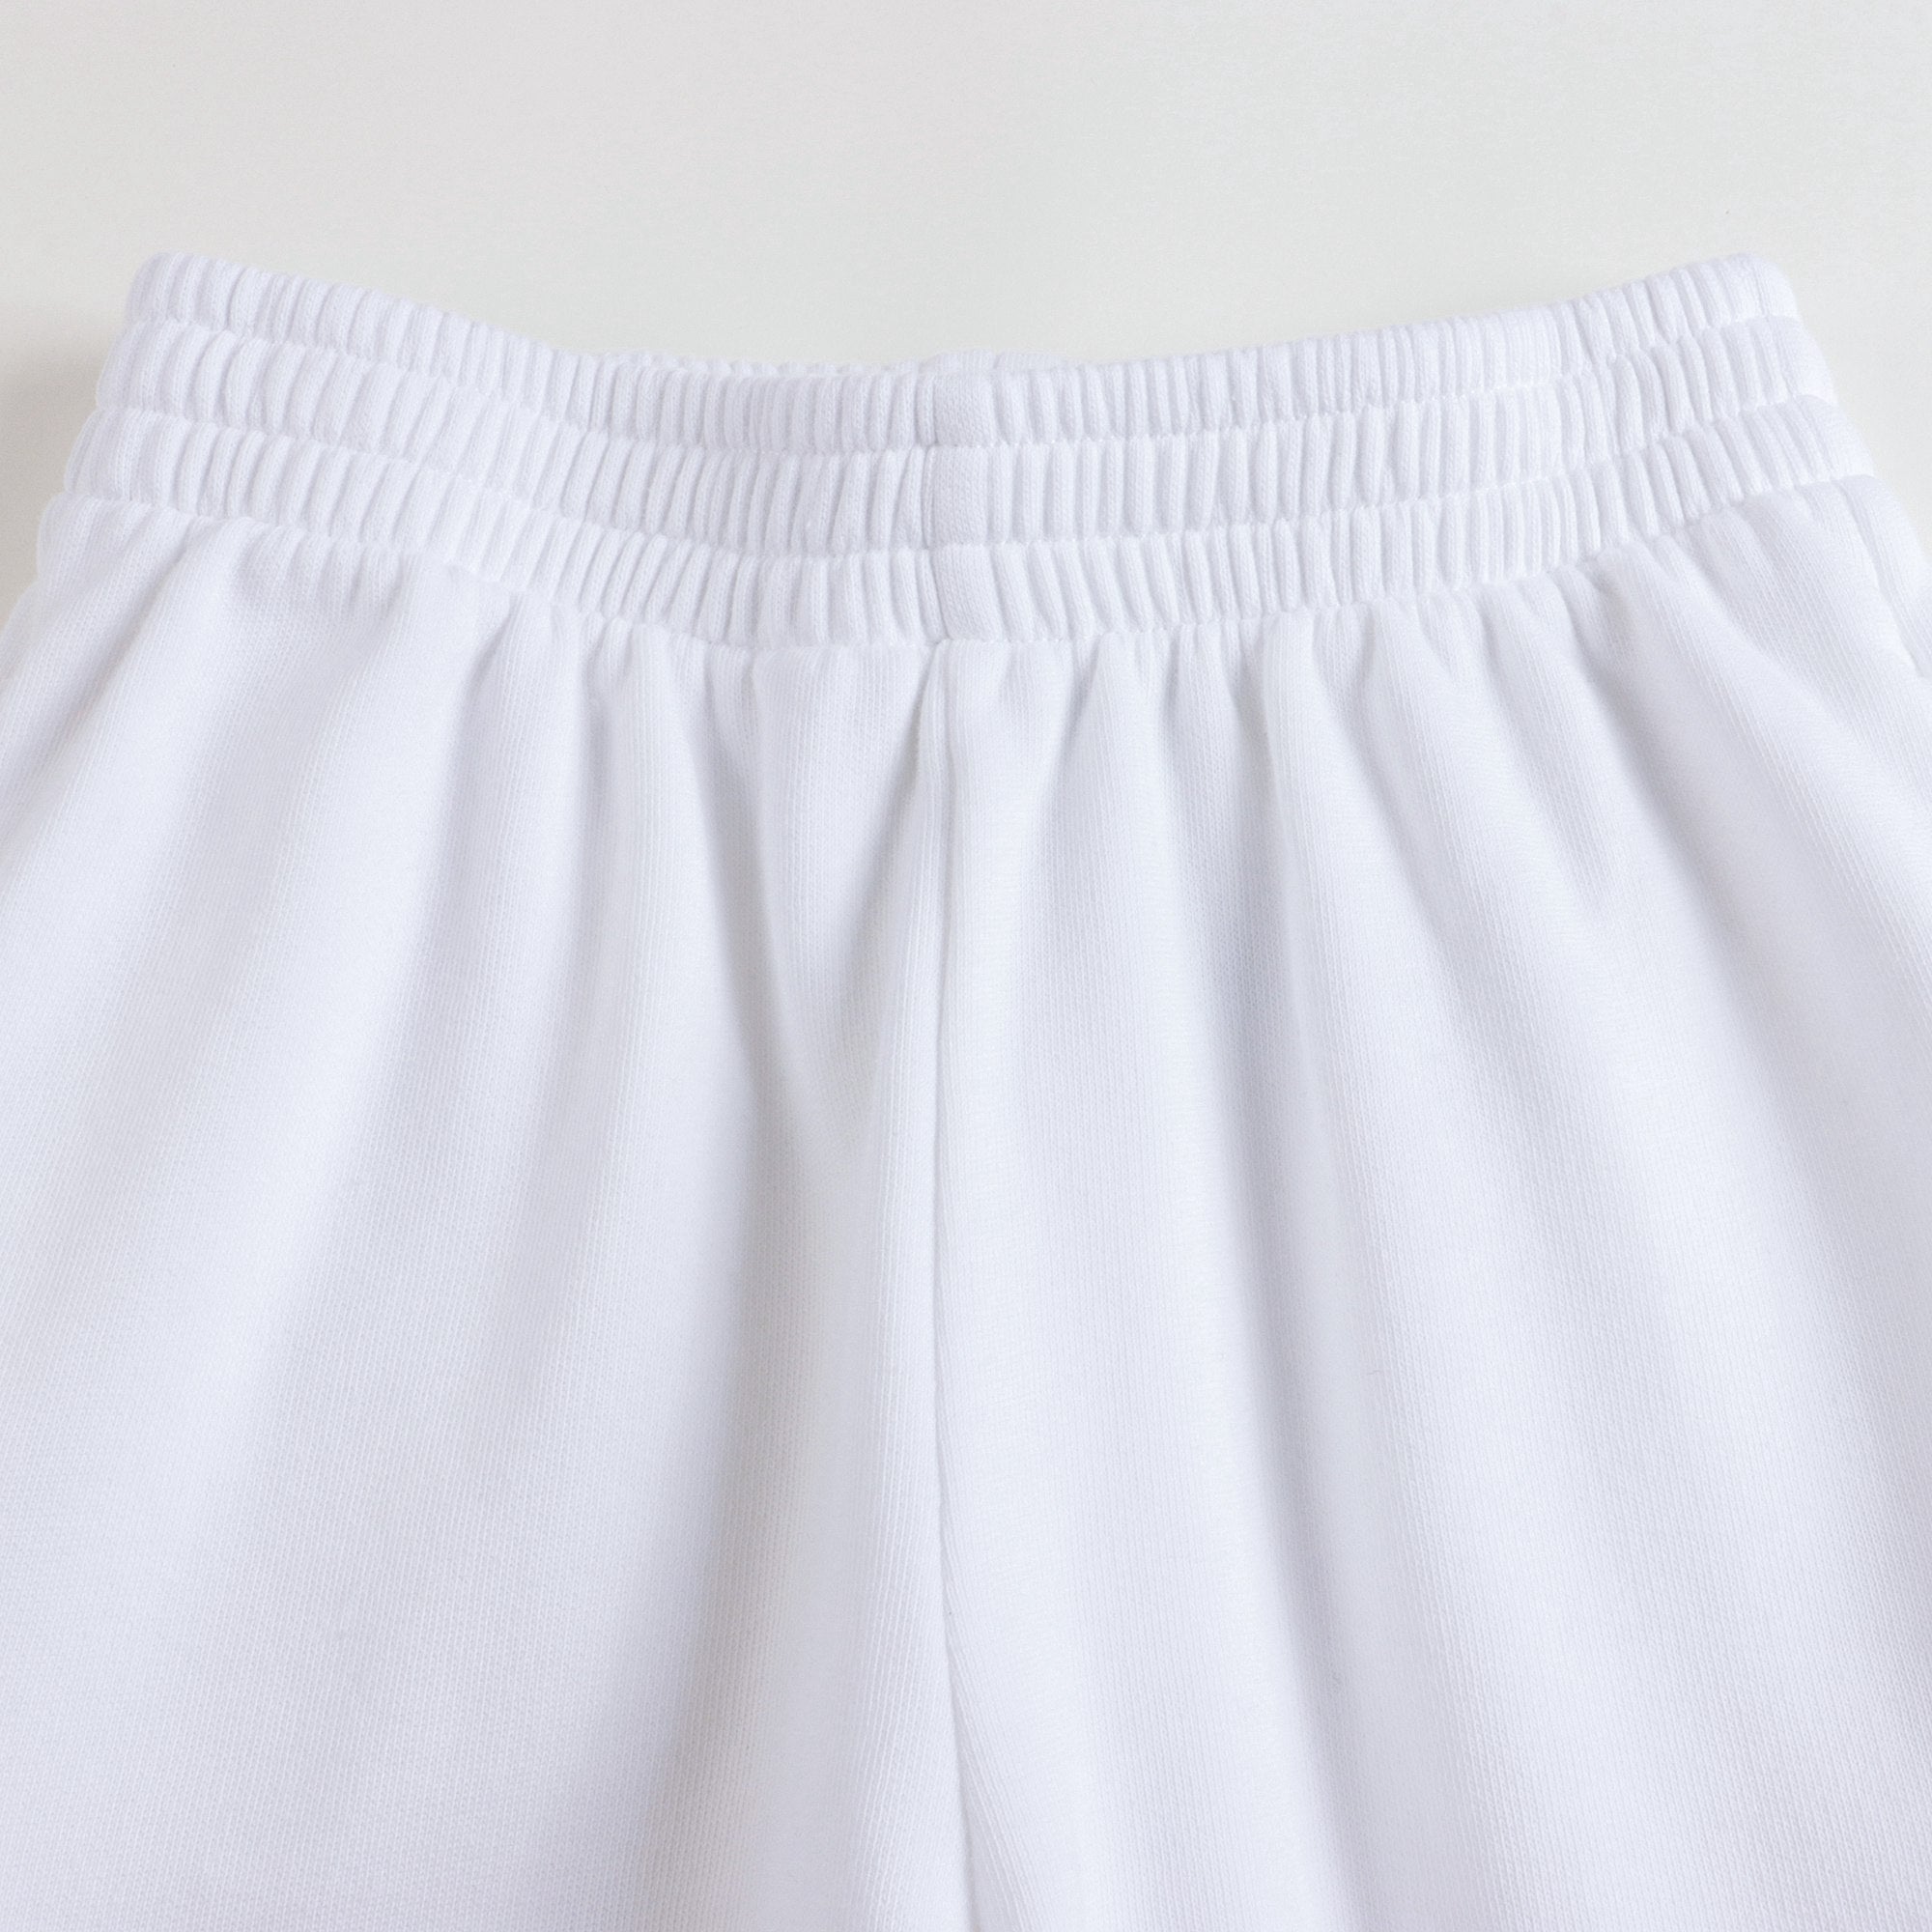 Boys & Girls White Logo Cotton Trousers